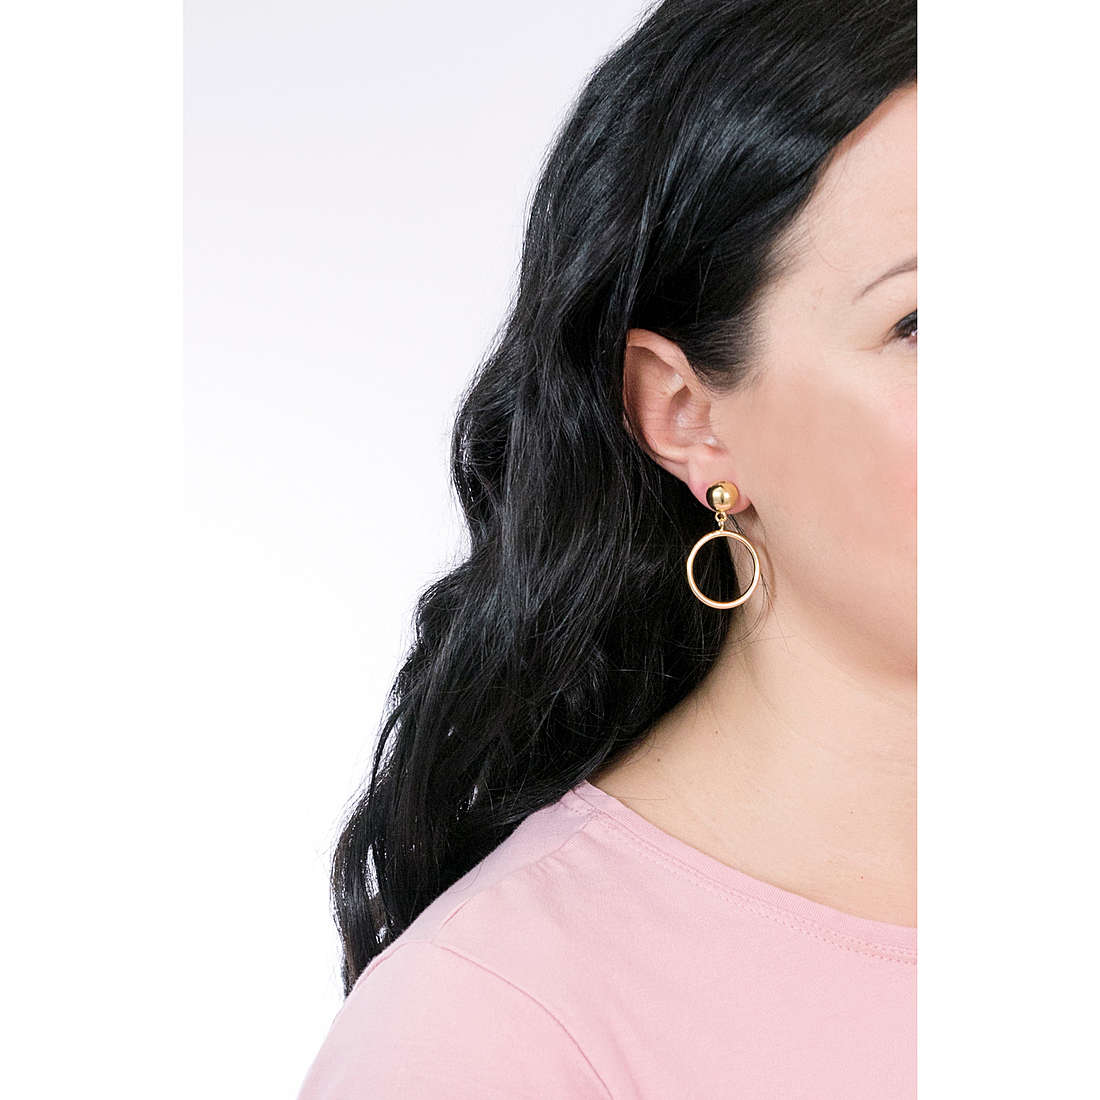 GioiaPura earrings woman GYOARW0349-2 wearing